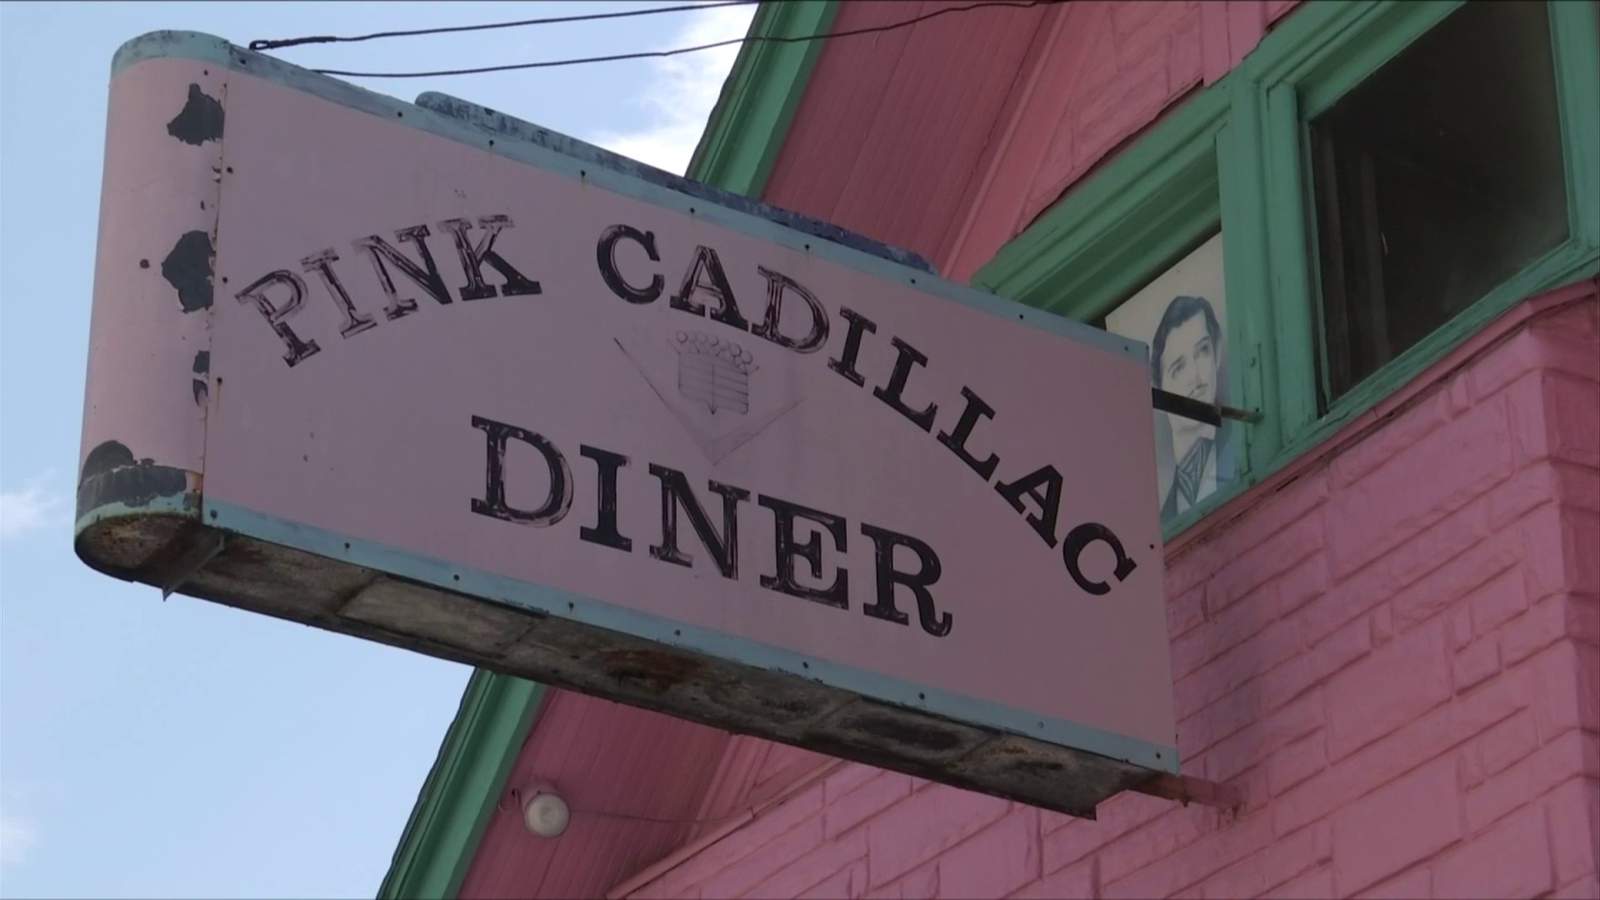 Interstate 81 diner reopens after travelers show up to try famed Elvis burger